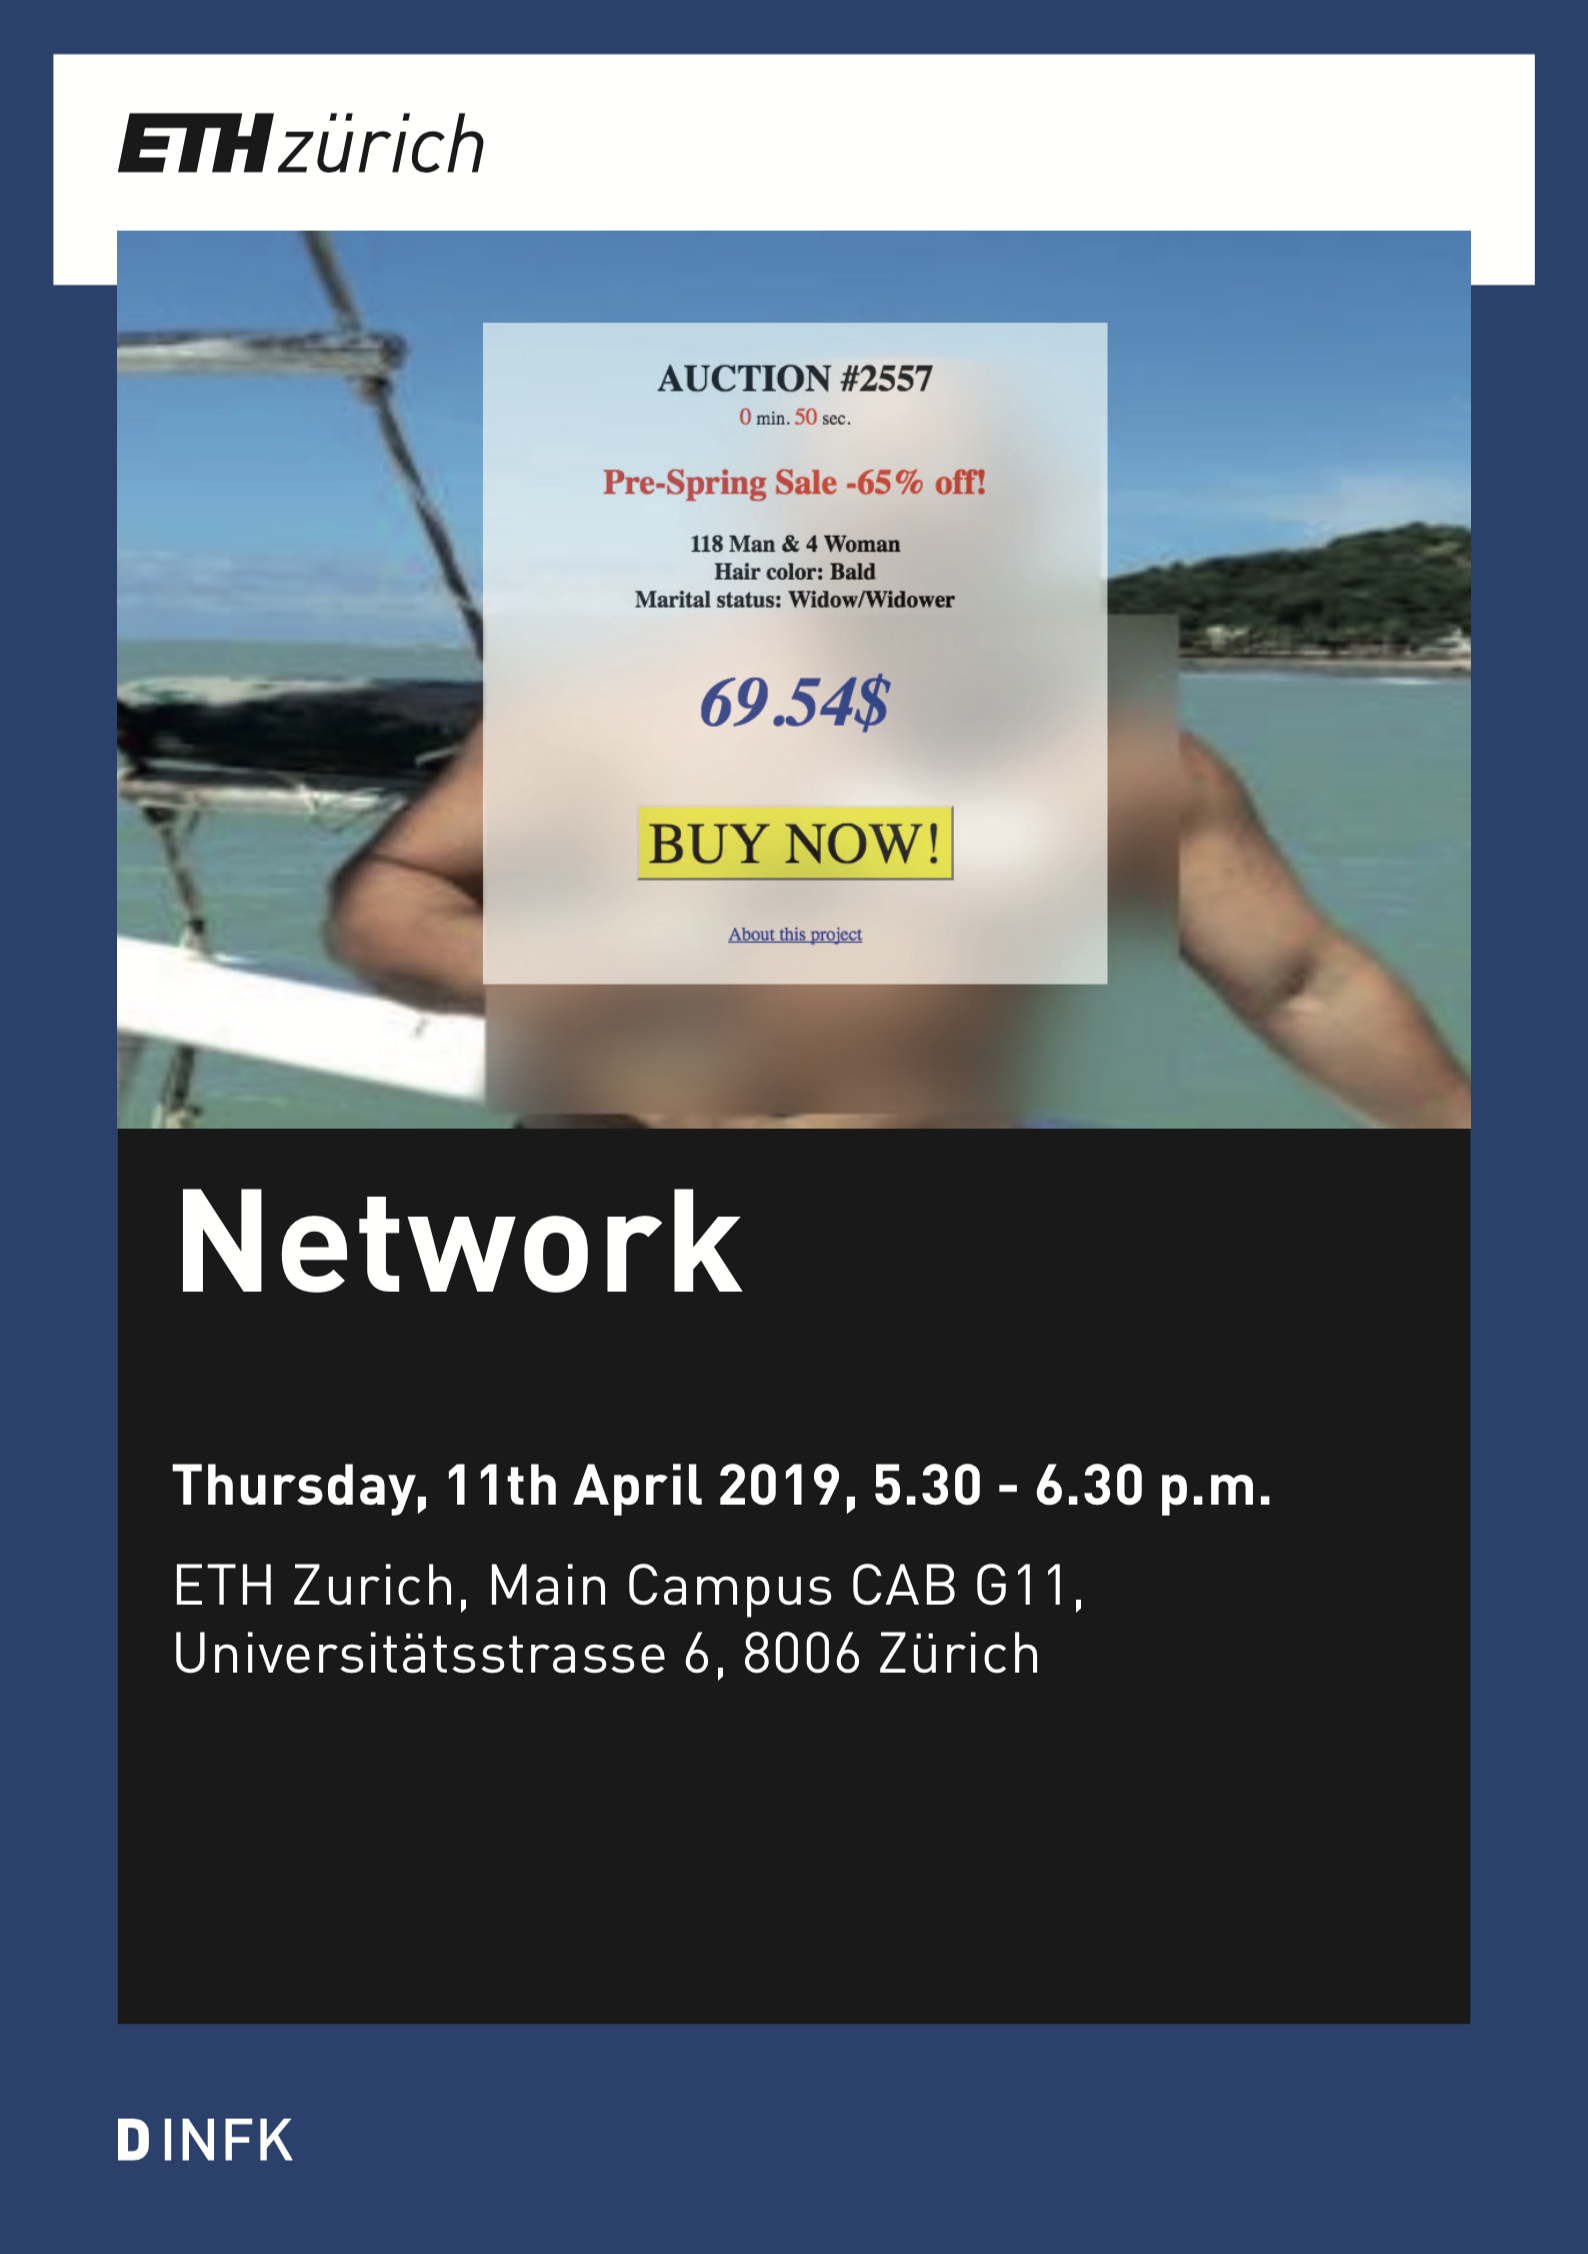 Network flyer